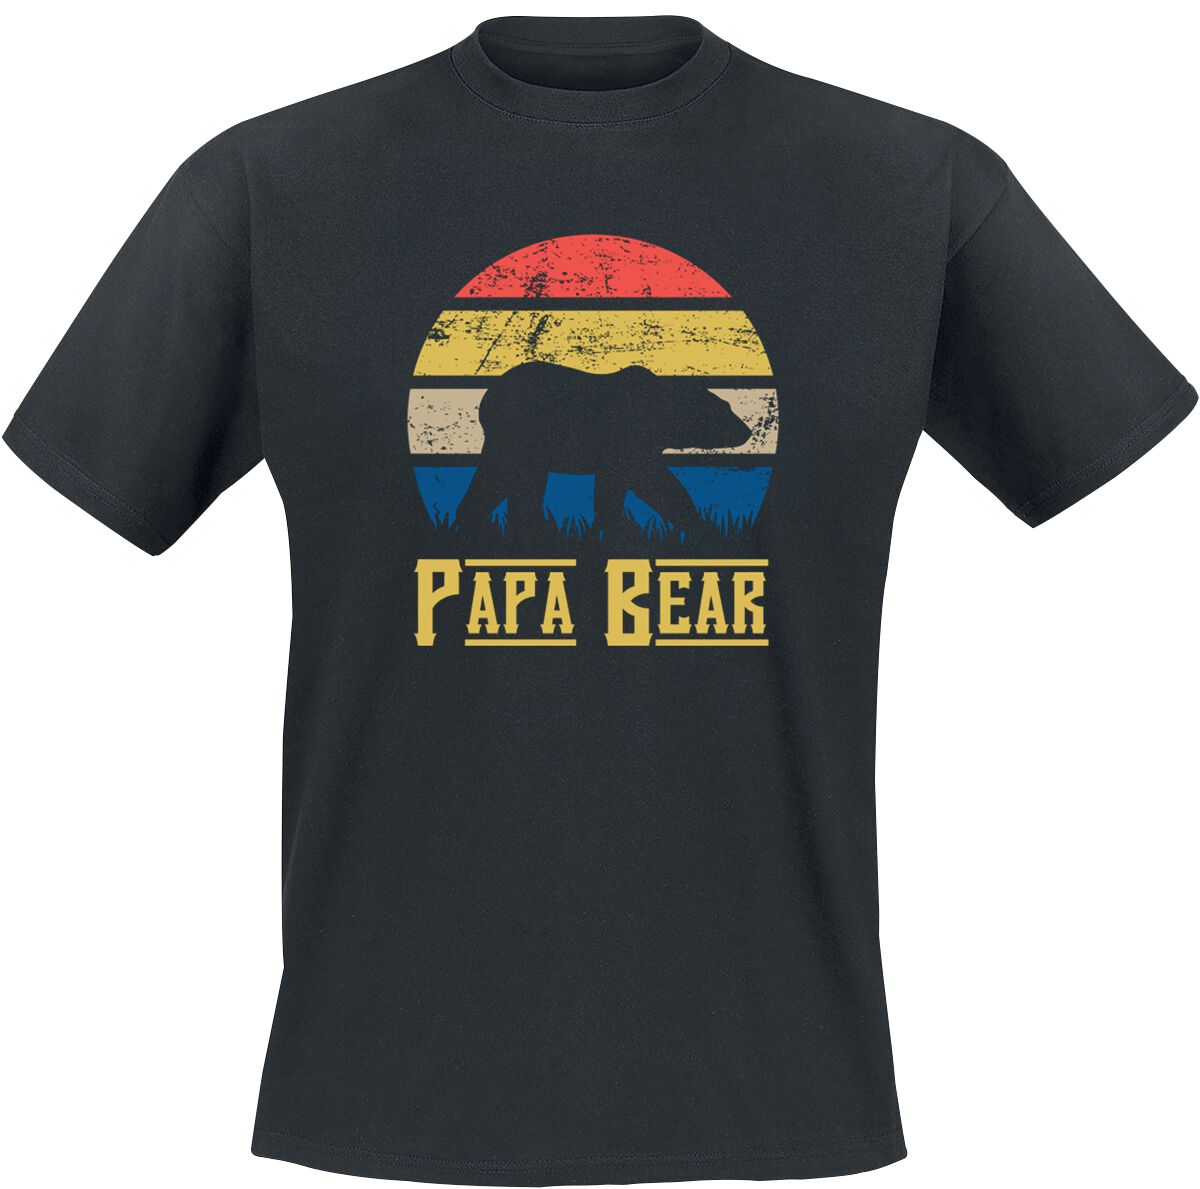 Familie & Freunde Papa Bear T-Shirt schwarz in 4XL